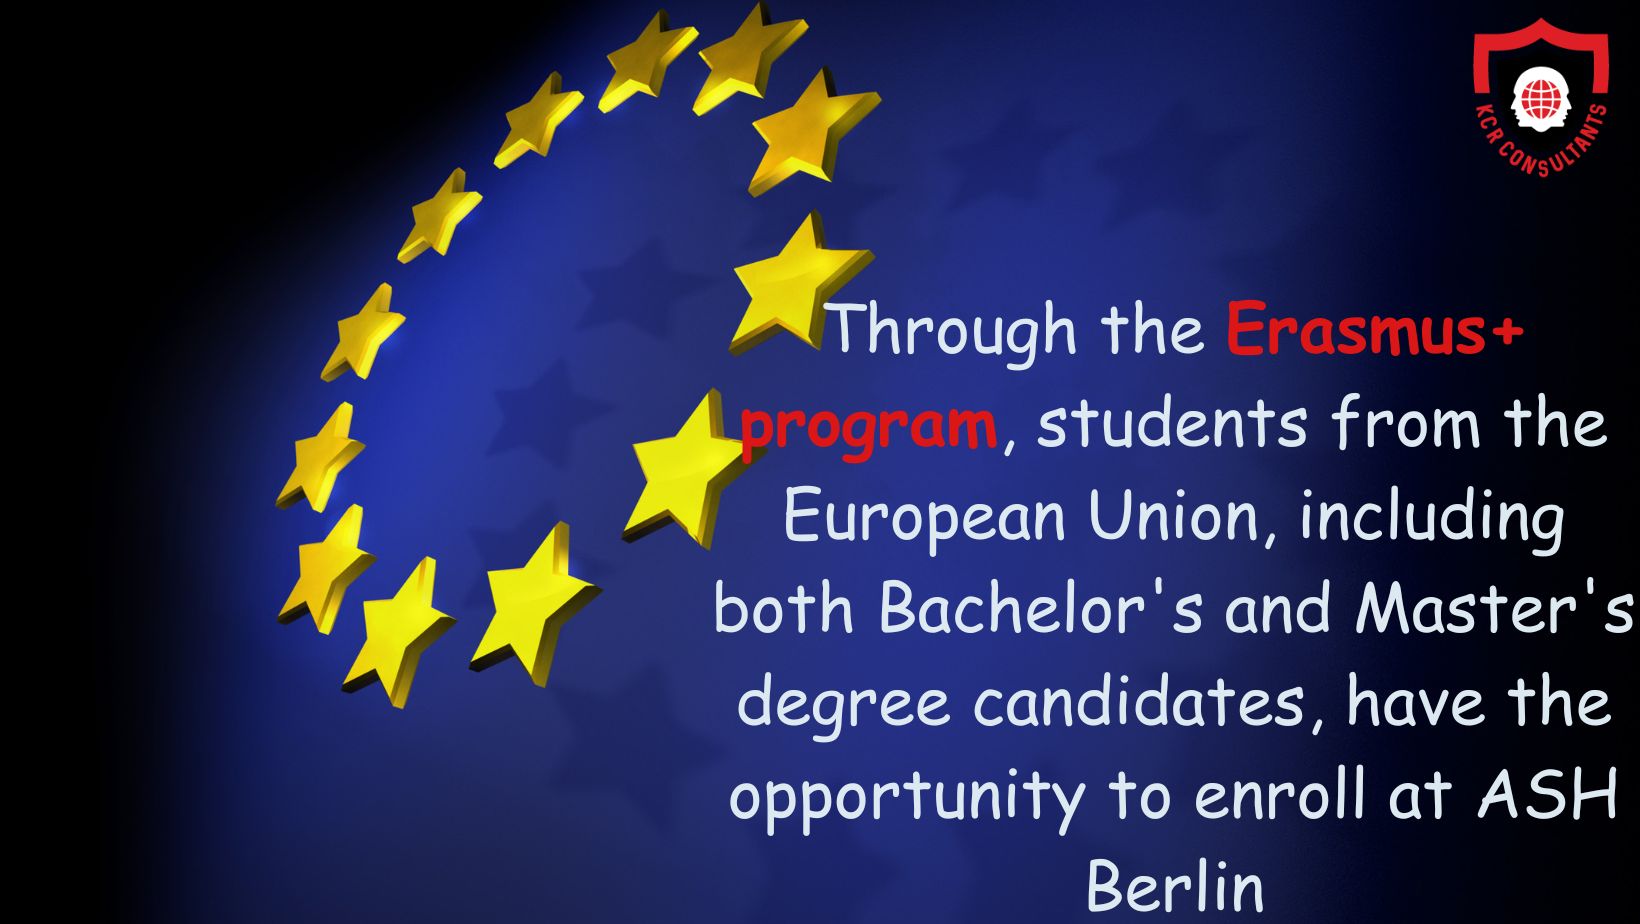 ALICE SALOMON UNIVERSITY OF APPLIED SCIENCES BERLIN - Erasmus+ program